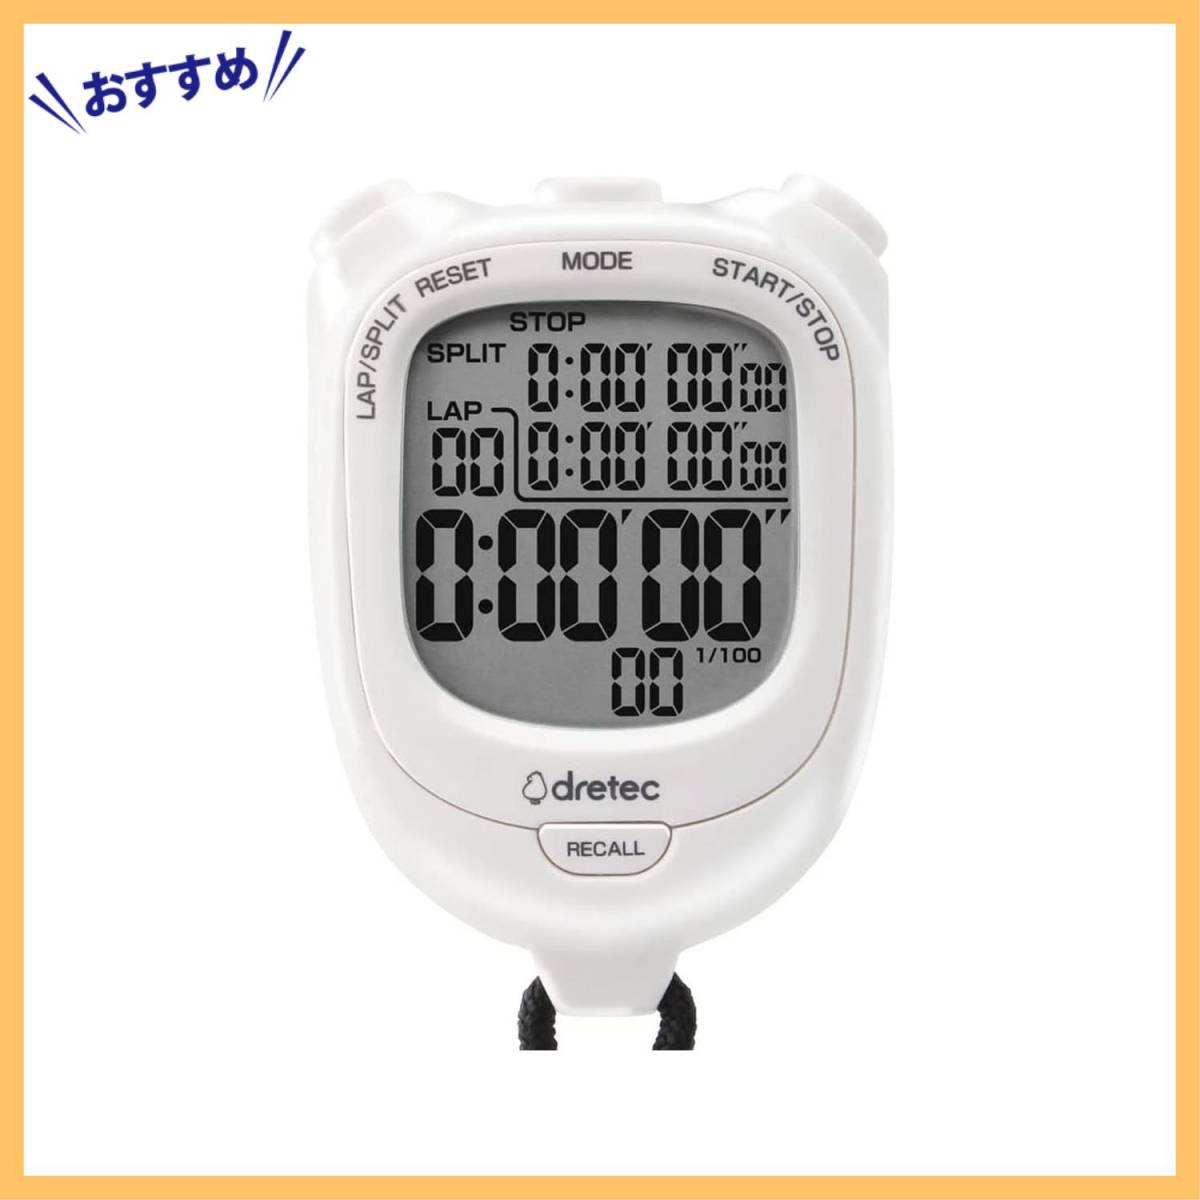 Kitchen Timer, Newentor Digital Productivity Timer with Alarm Clock, K